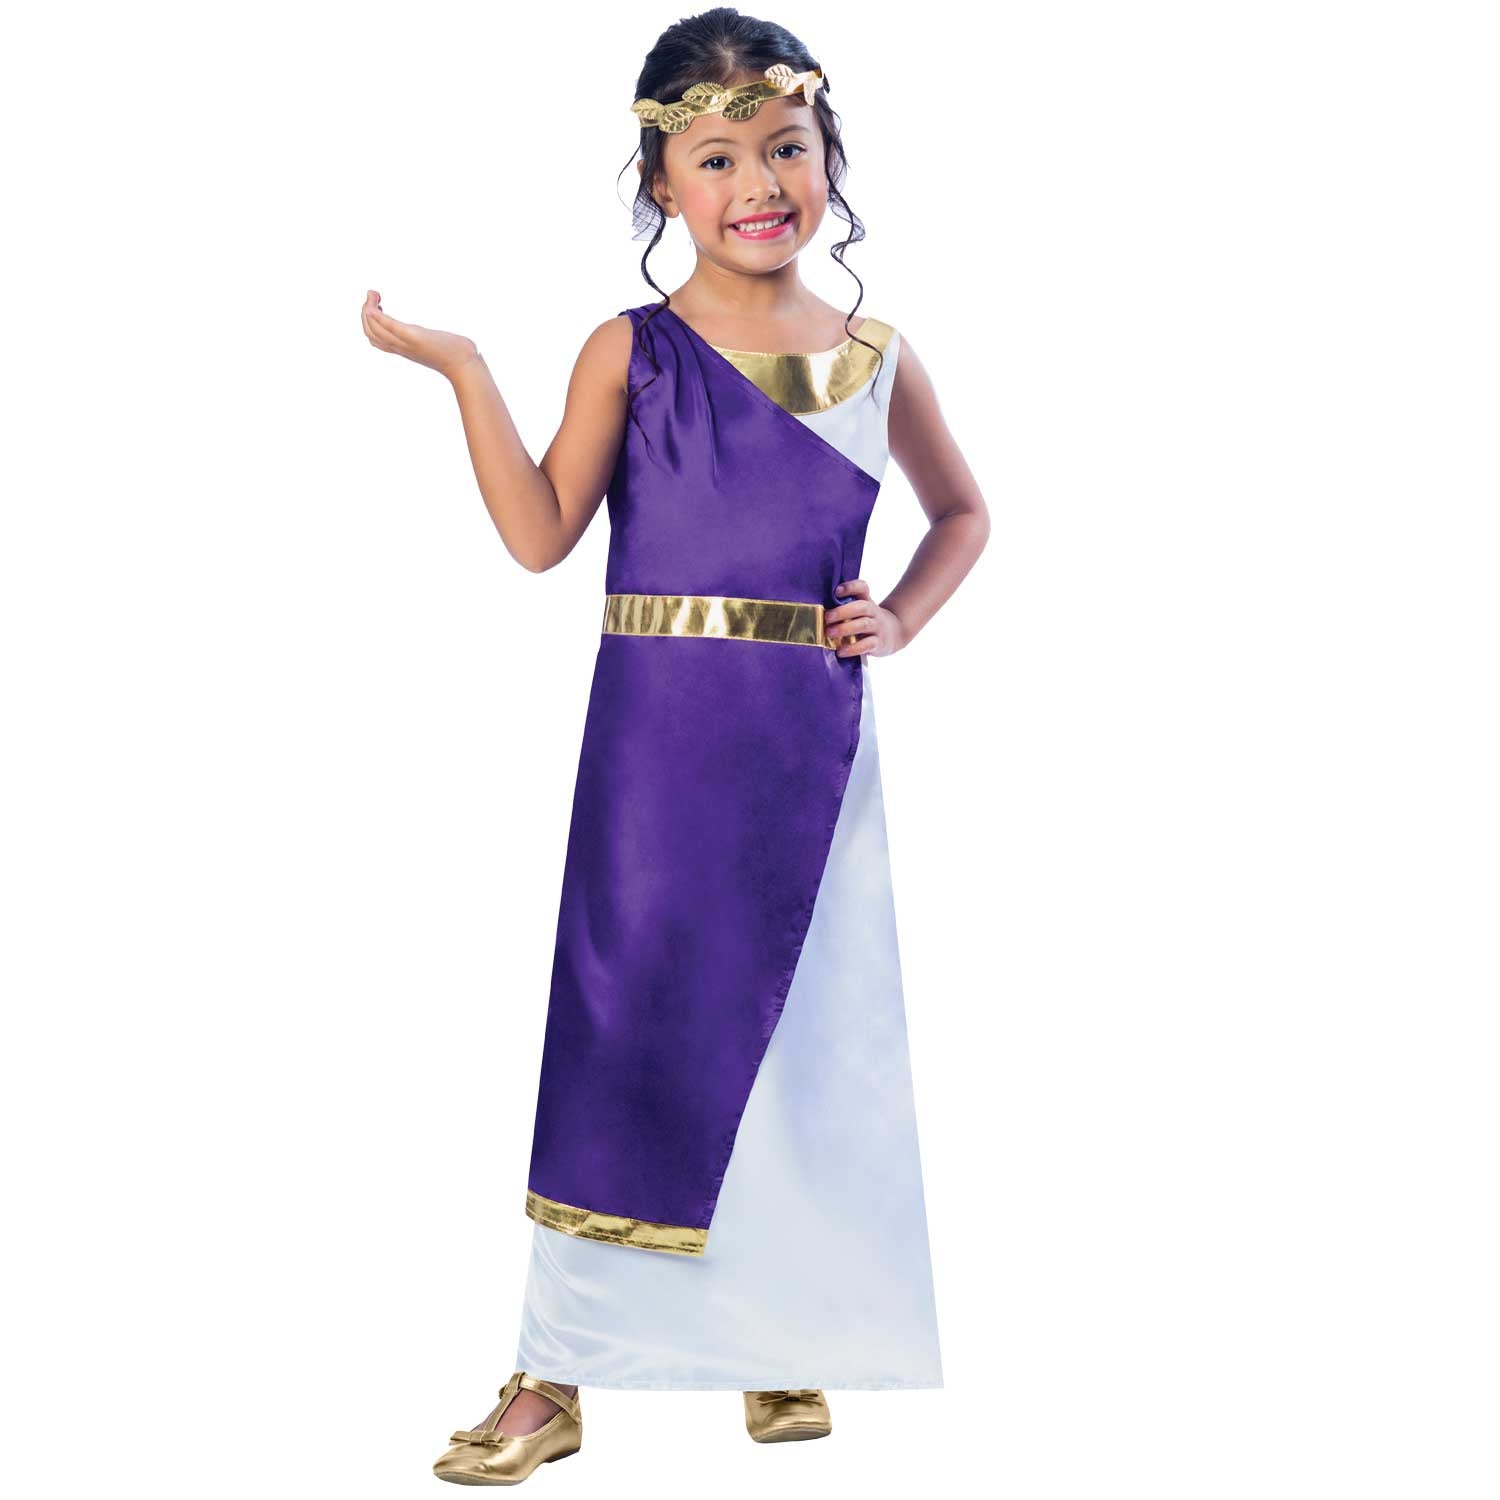 Roman Girl Fancy Dress Costume includes dress and headband